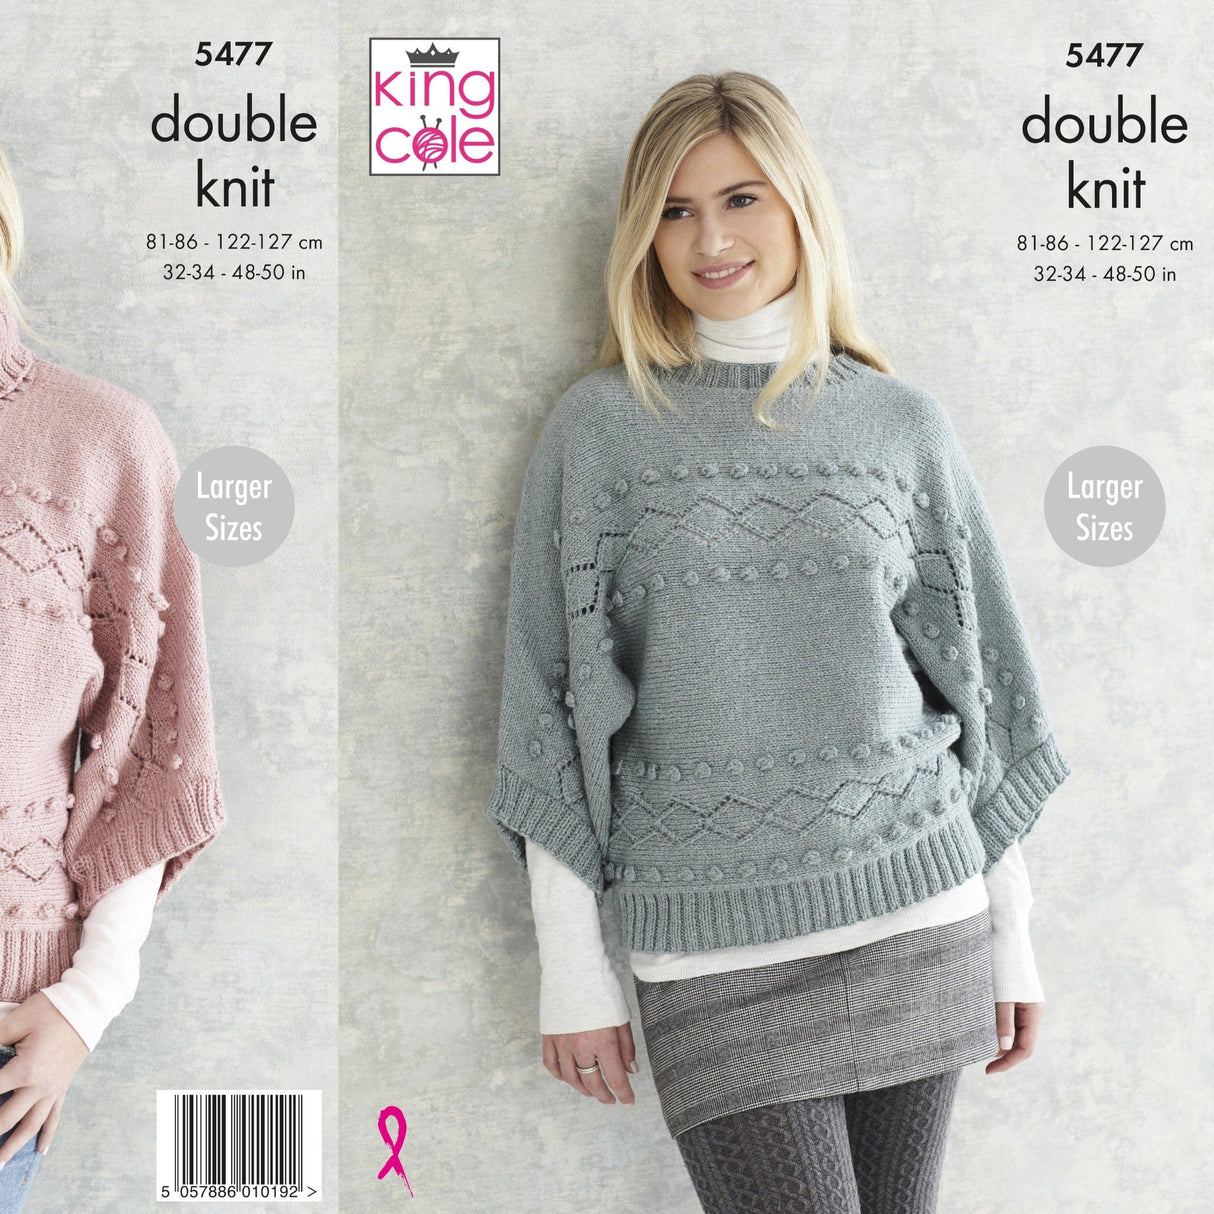 King Cole Patterns King Cole Ladies Sweater DK Knitting Pattern 5477